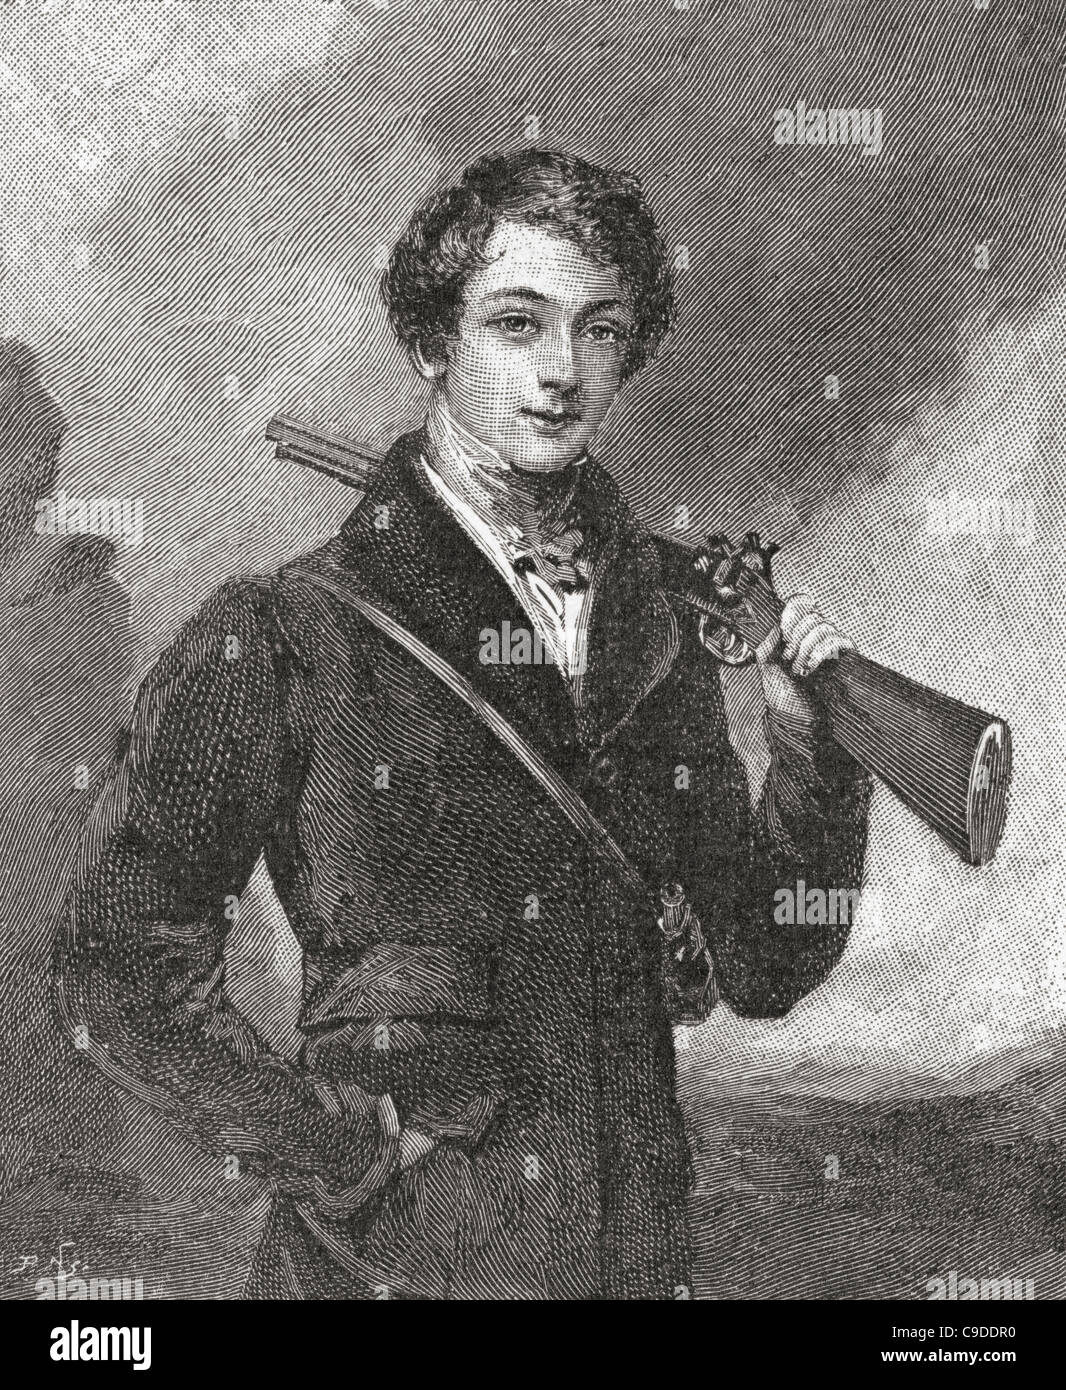 John James Robert Manners, 7th Duke of Rutland, aged 17, 1818 – 1906, known as Lord John Manners before 1888. English statesman. Stock Photo